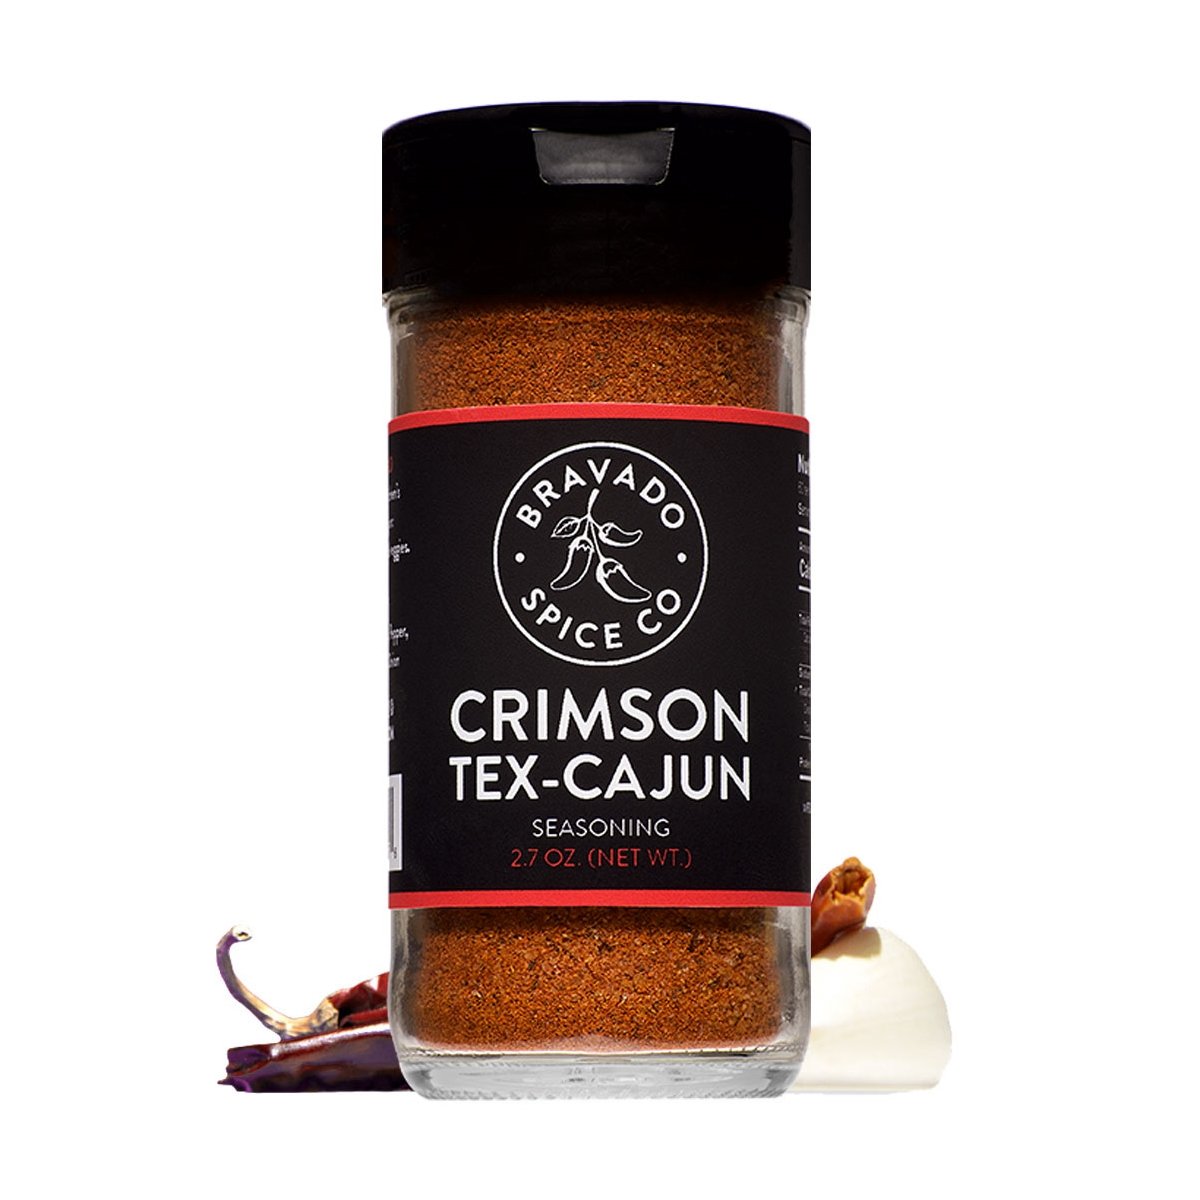 https://mopeppers.at/media/image/product/6346/lg/bravado-crimson-tex-cajun-seasoning.jpg